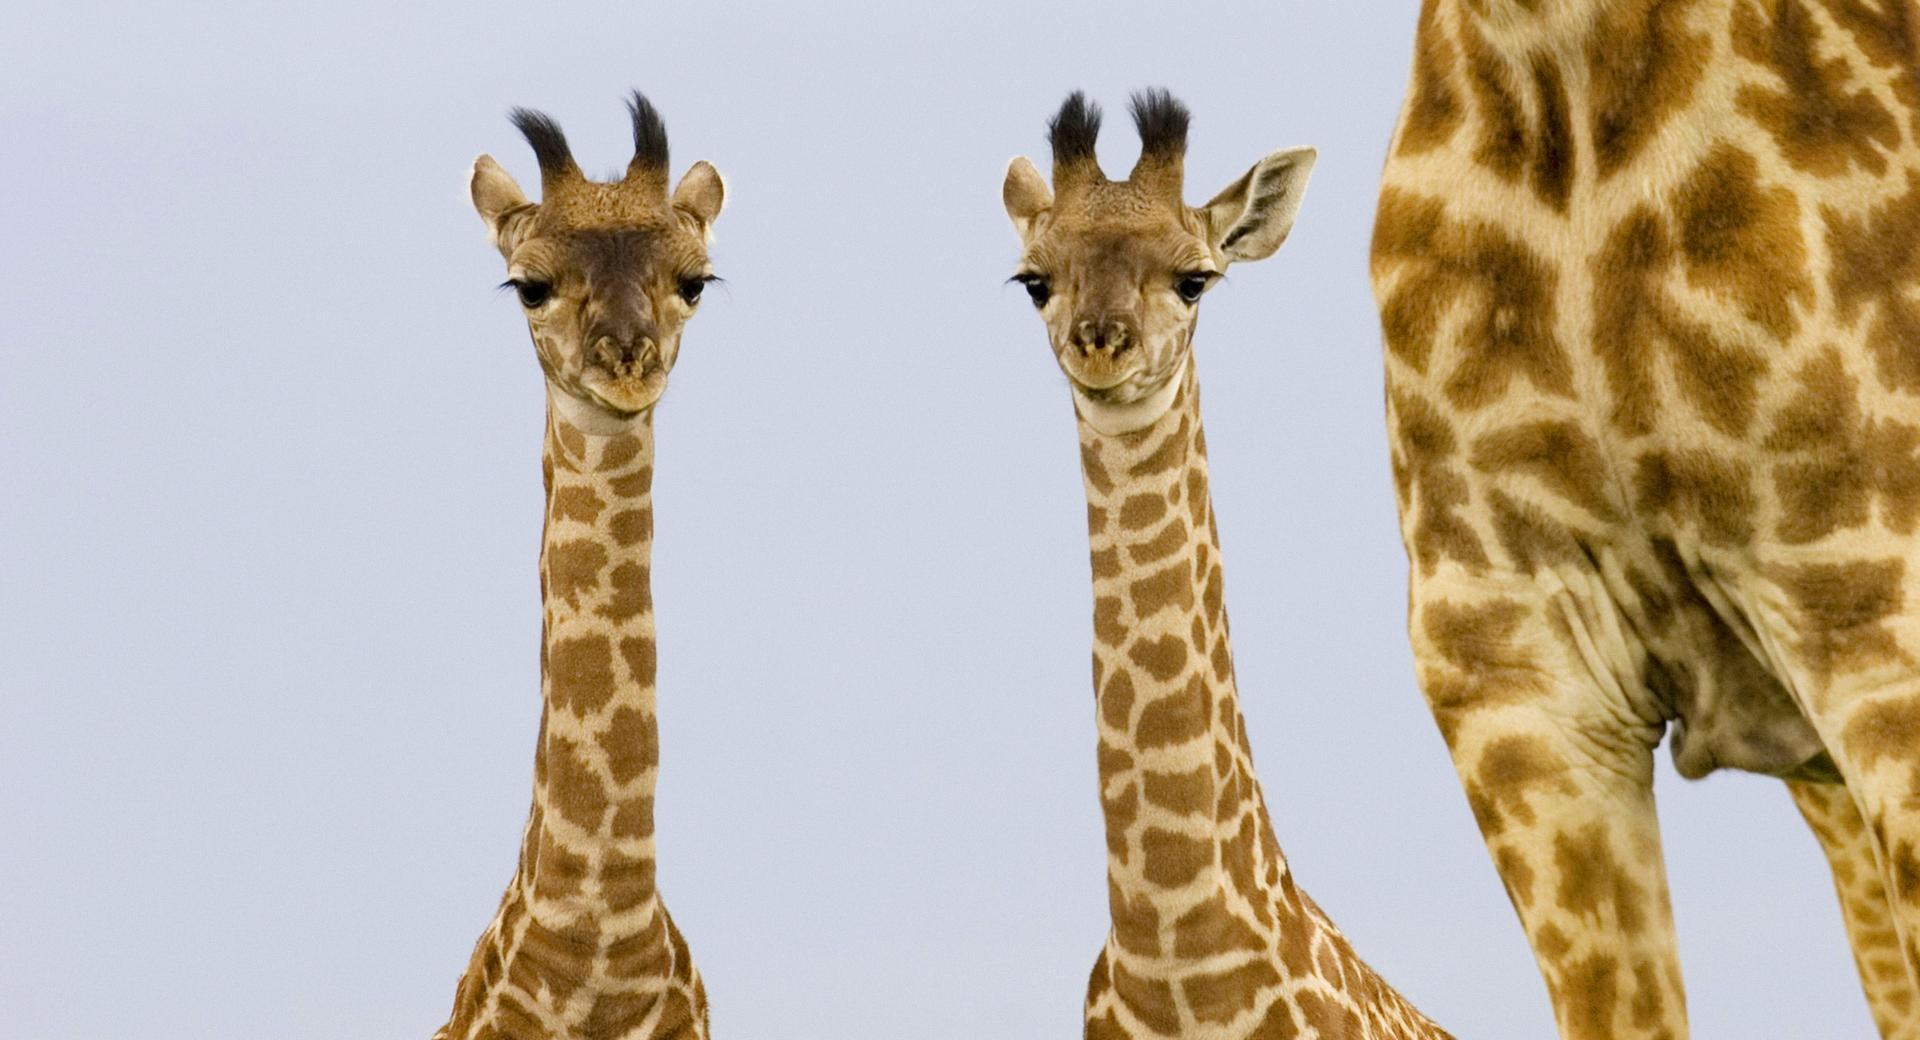 Two Newborn Giraffe Masai Mara Kenya at 1280 x 960 size wallpapers HD quality